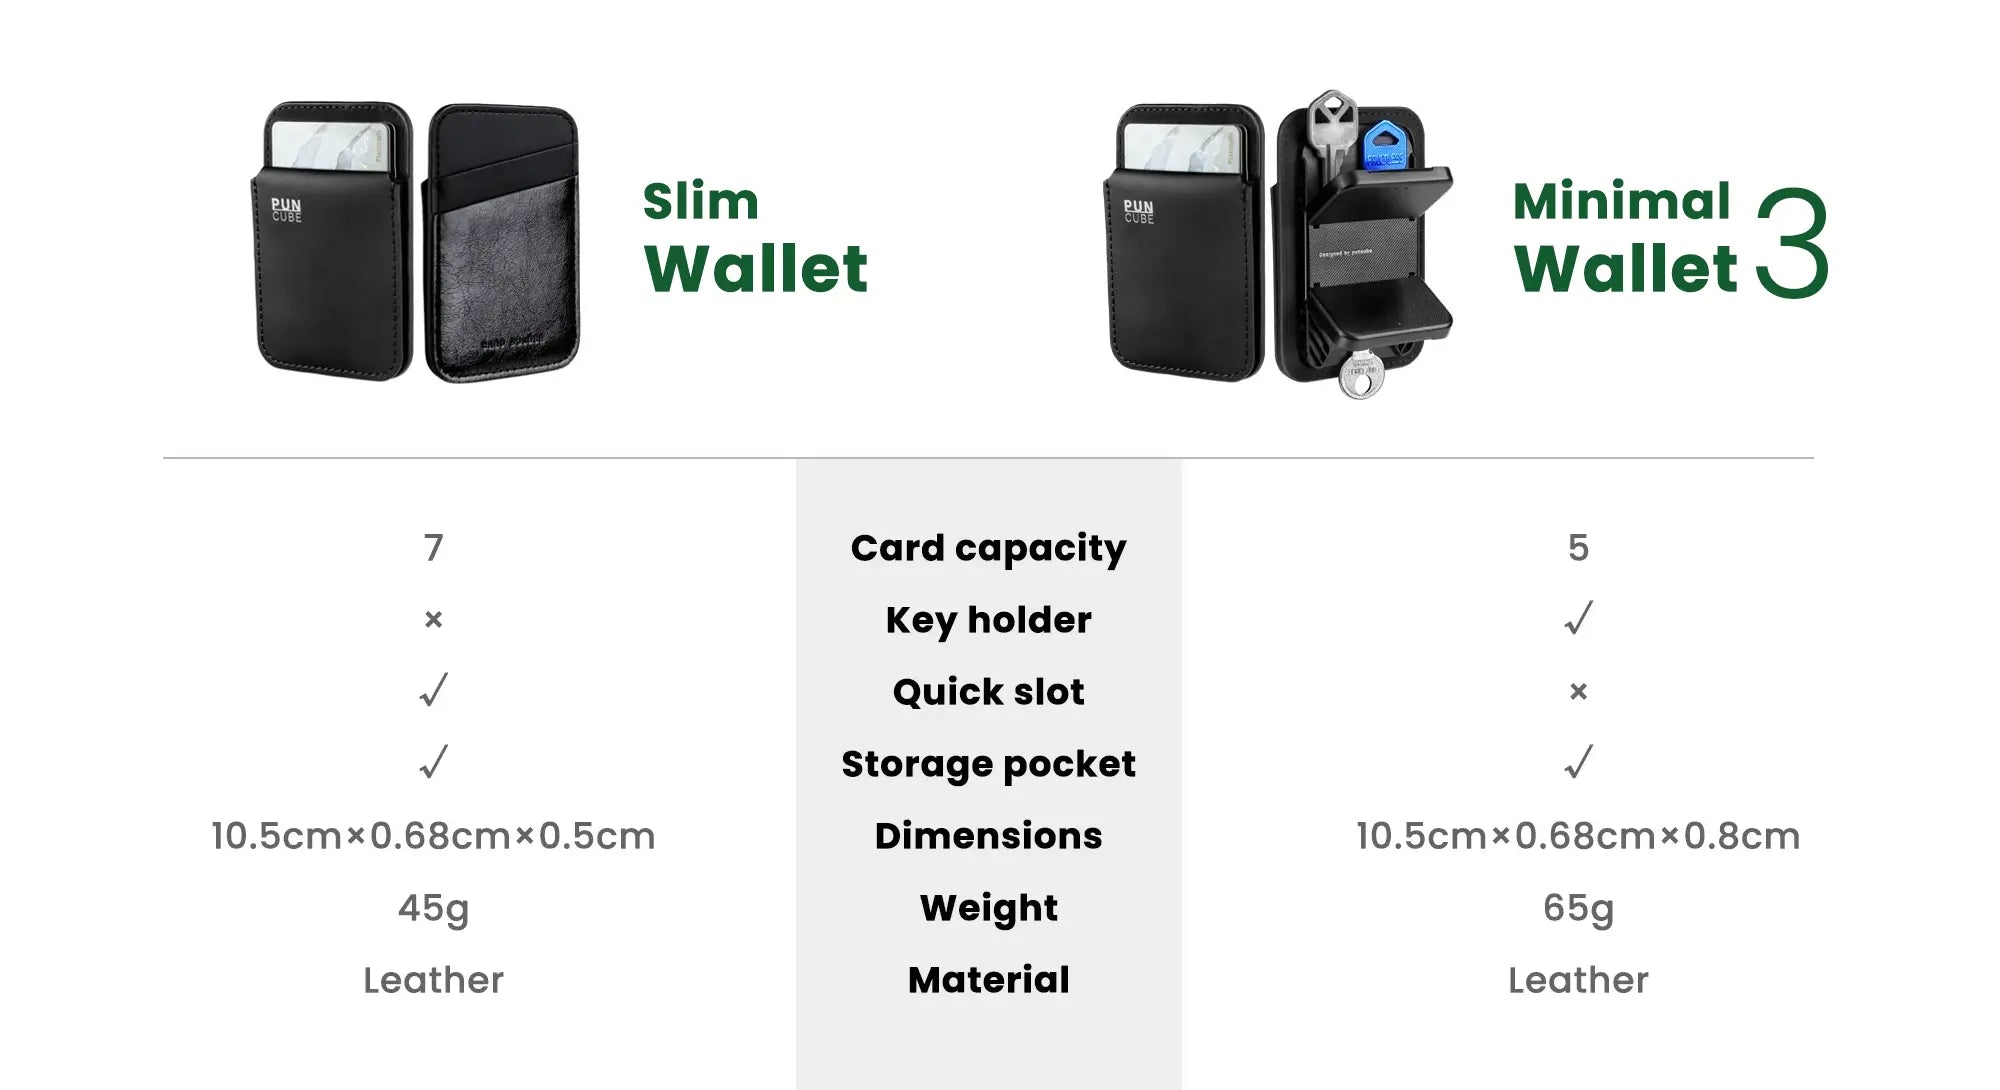 slim wallet vs minimal wallet 3